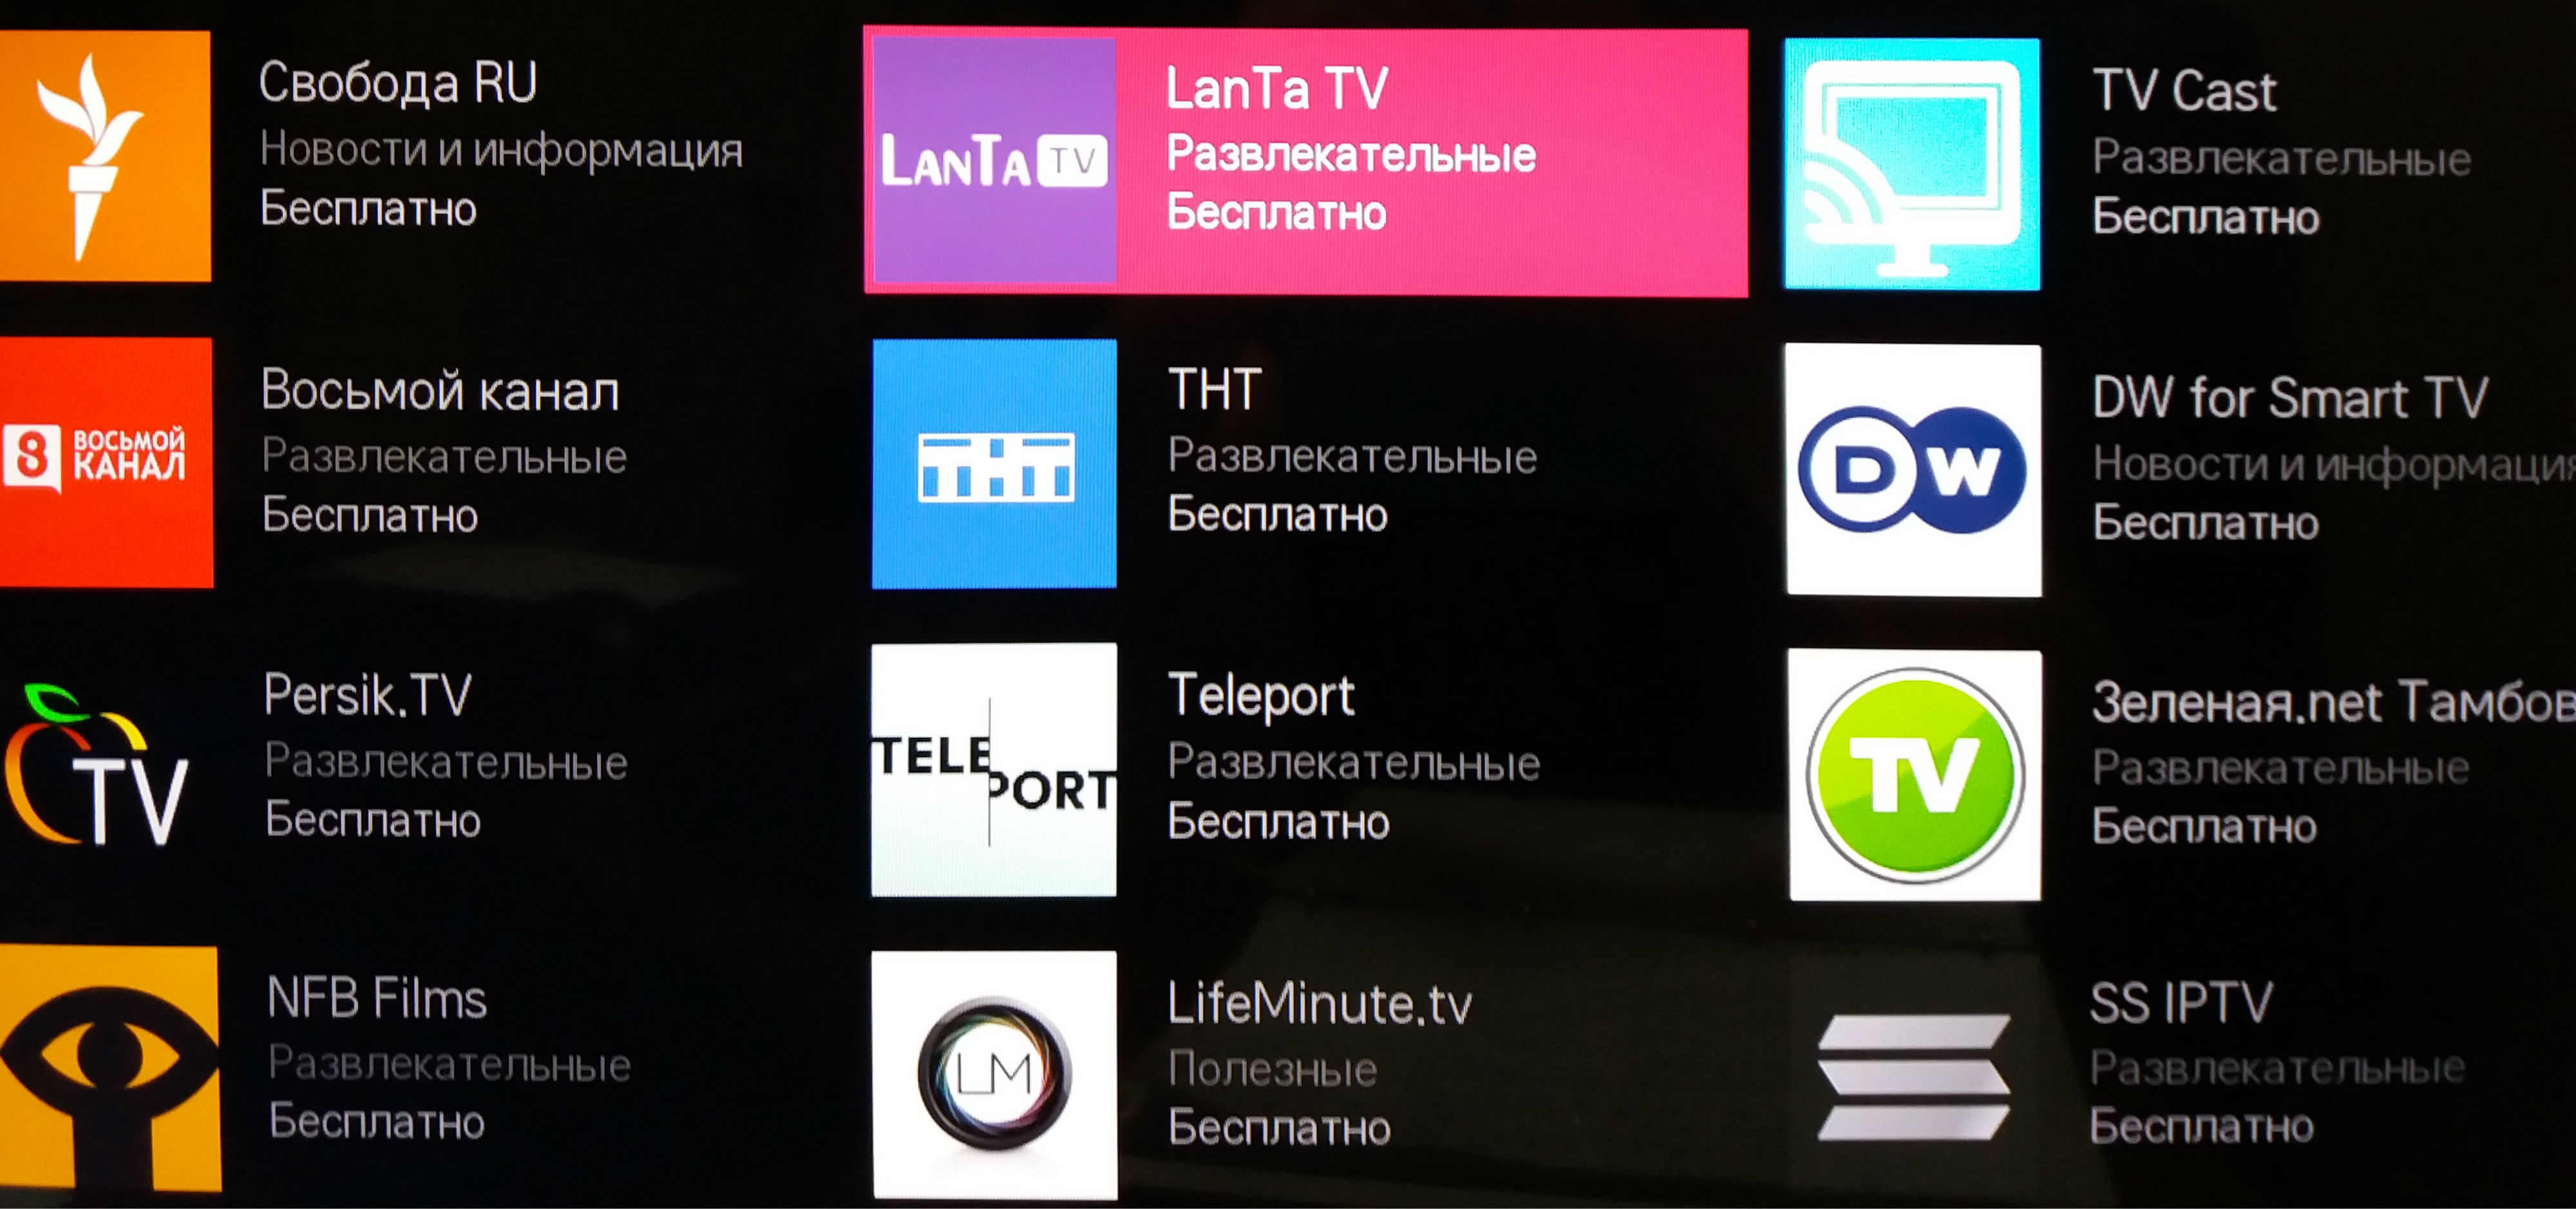 Как установить на телевизор lg приложение zona. IPTV на смарт телевизоре. Магазин приложений LG TV. LG content Store Smart TV.